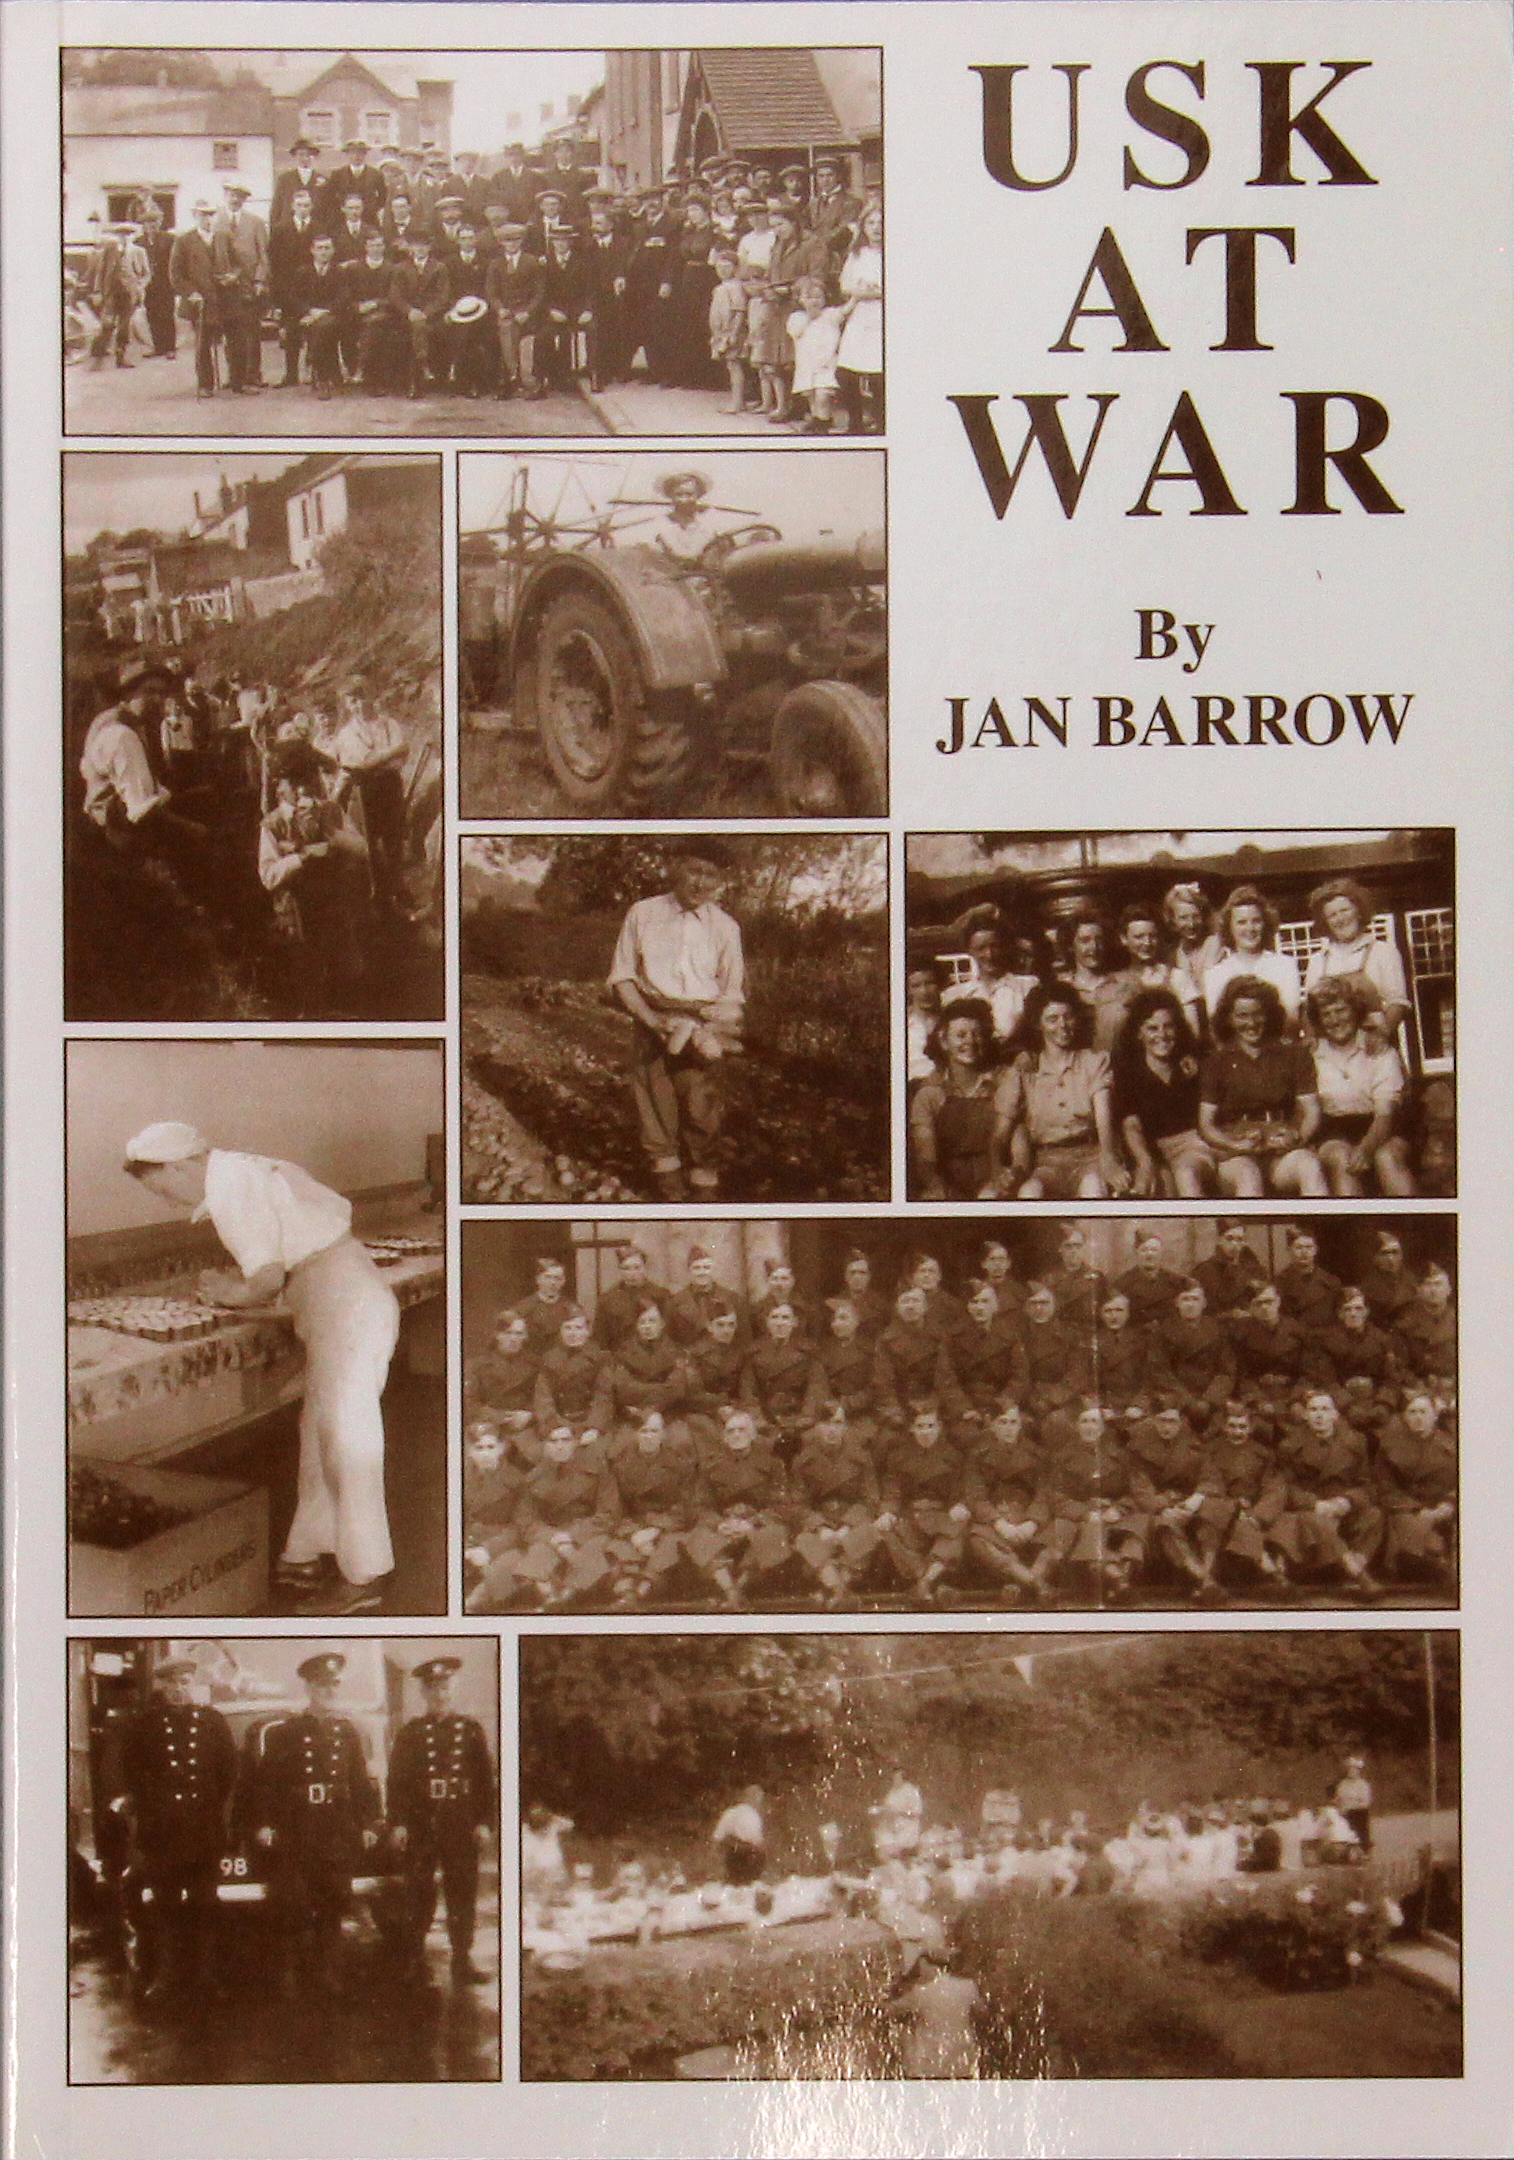 Usk at War, Jan Barrow, 2006, £9.00